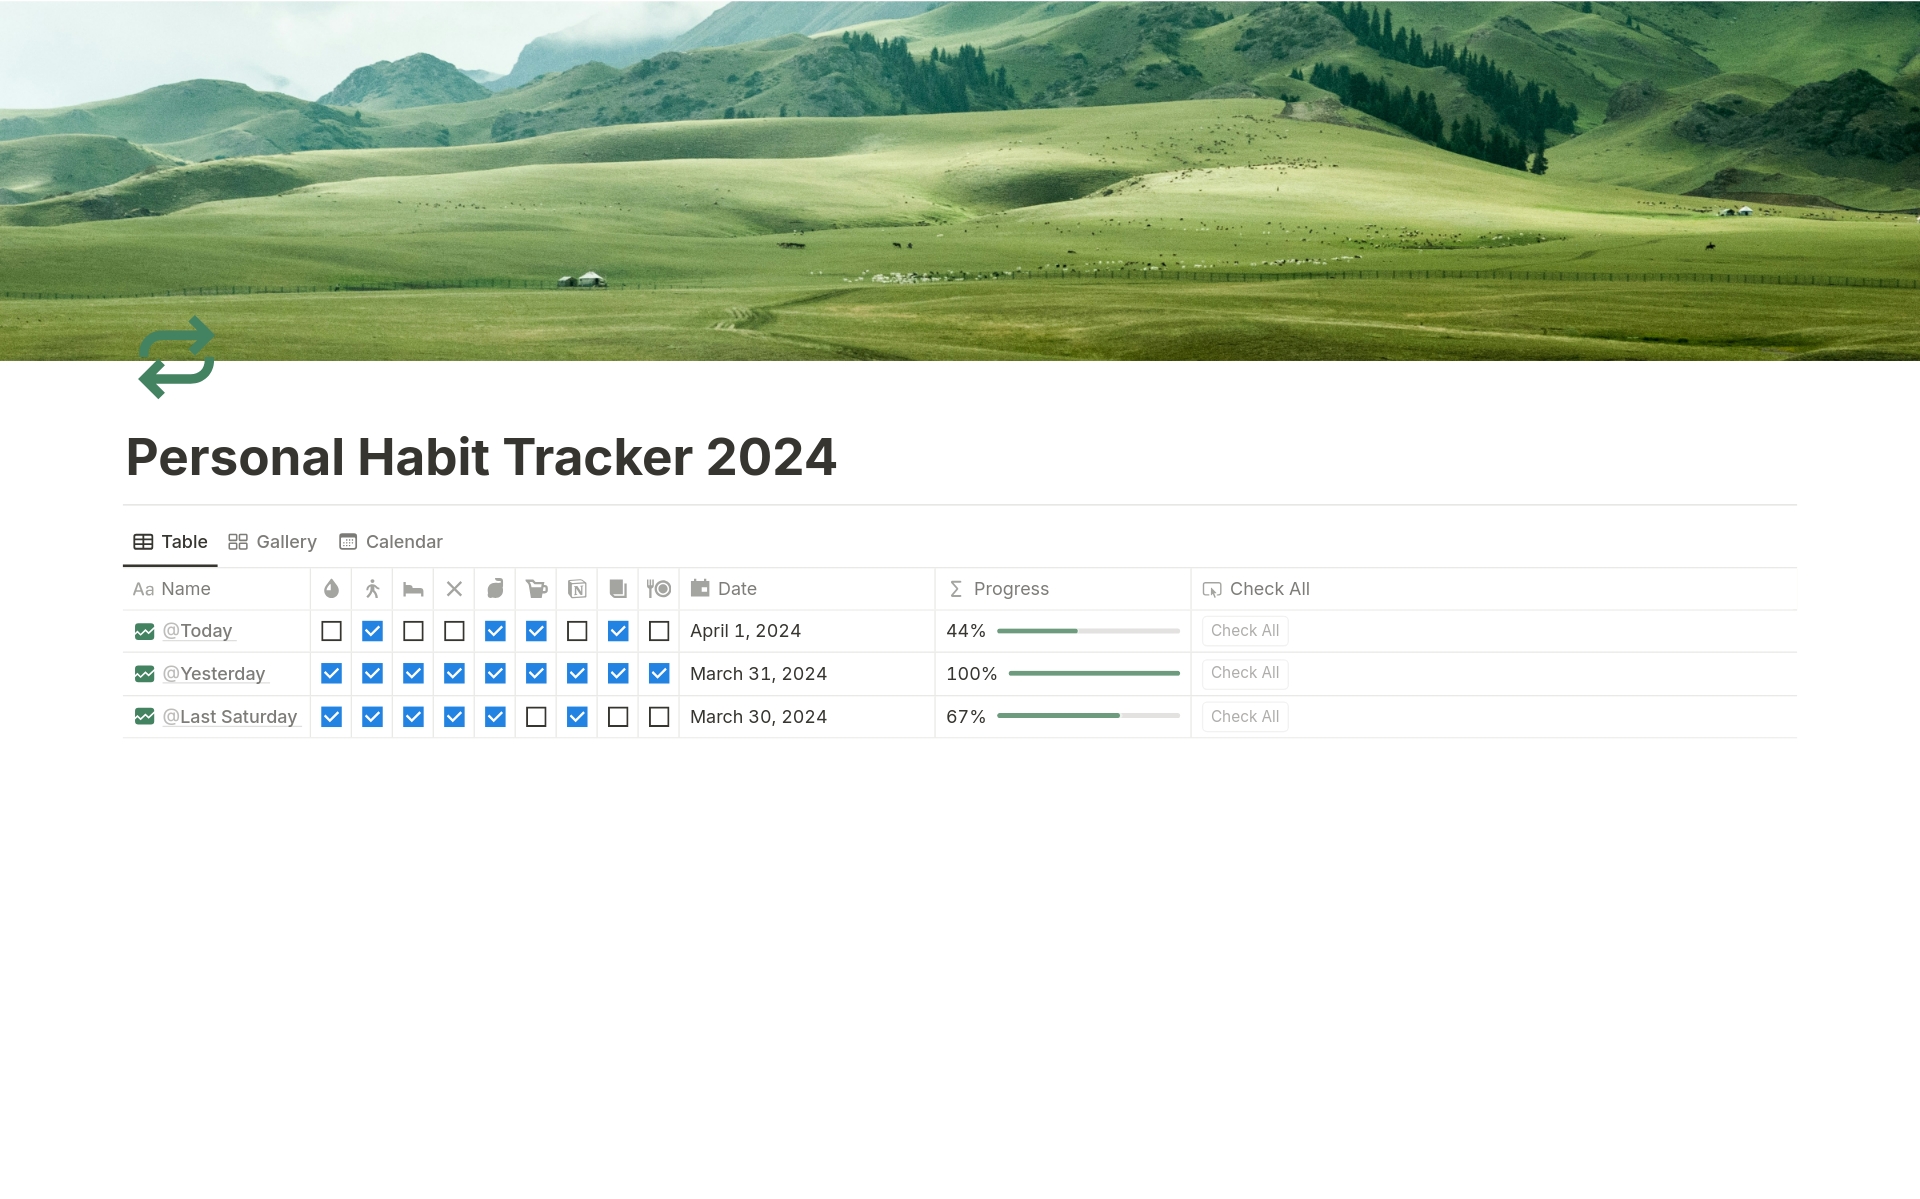 Vista previa de una plantilla para Personal Habit Tracker 2024